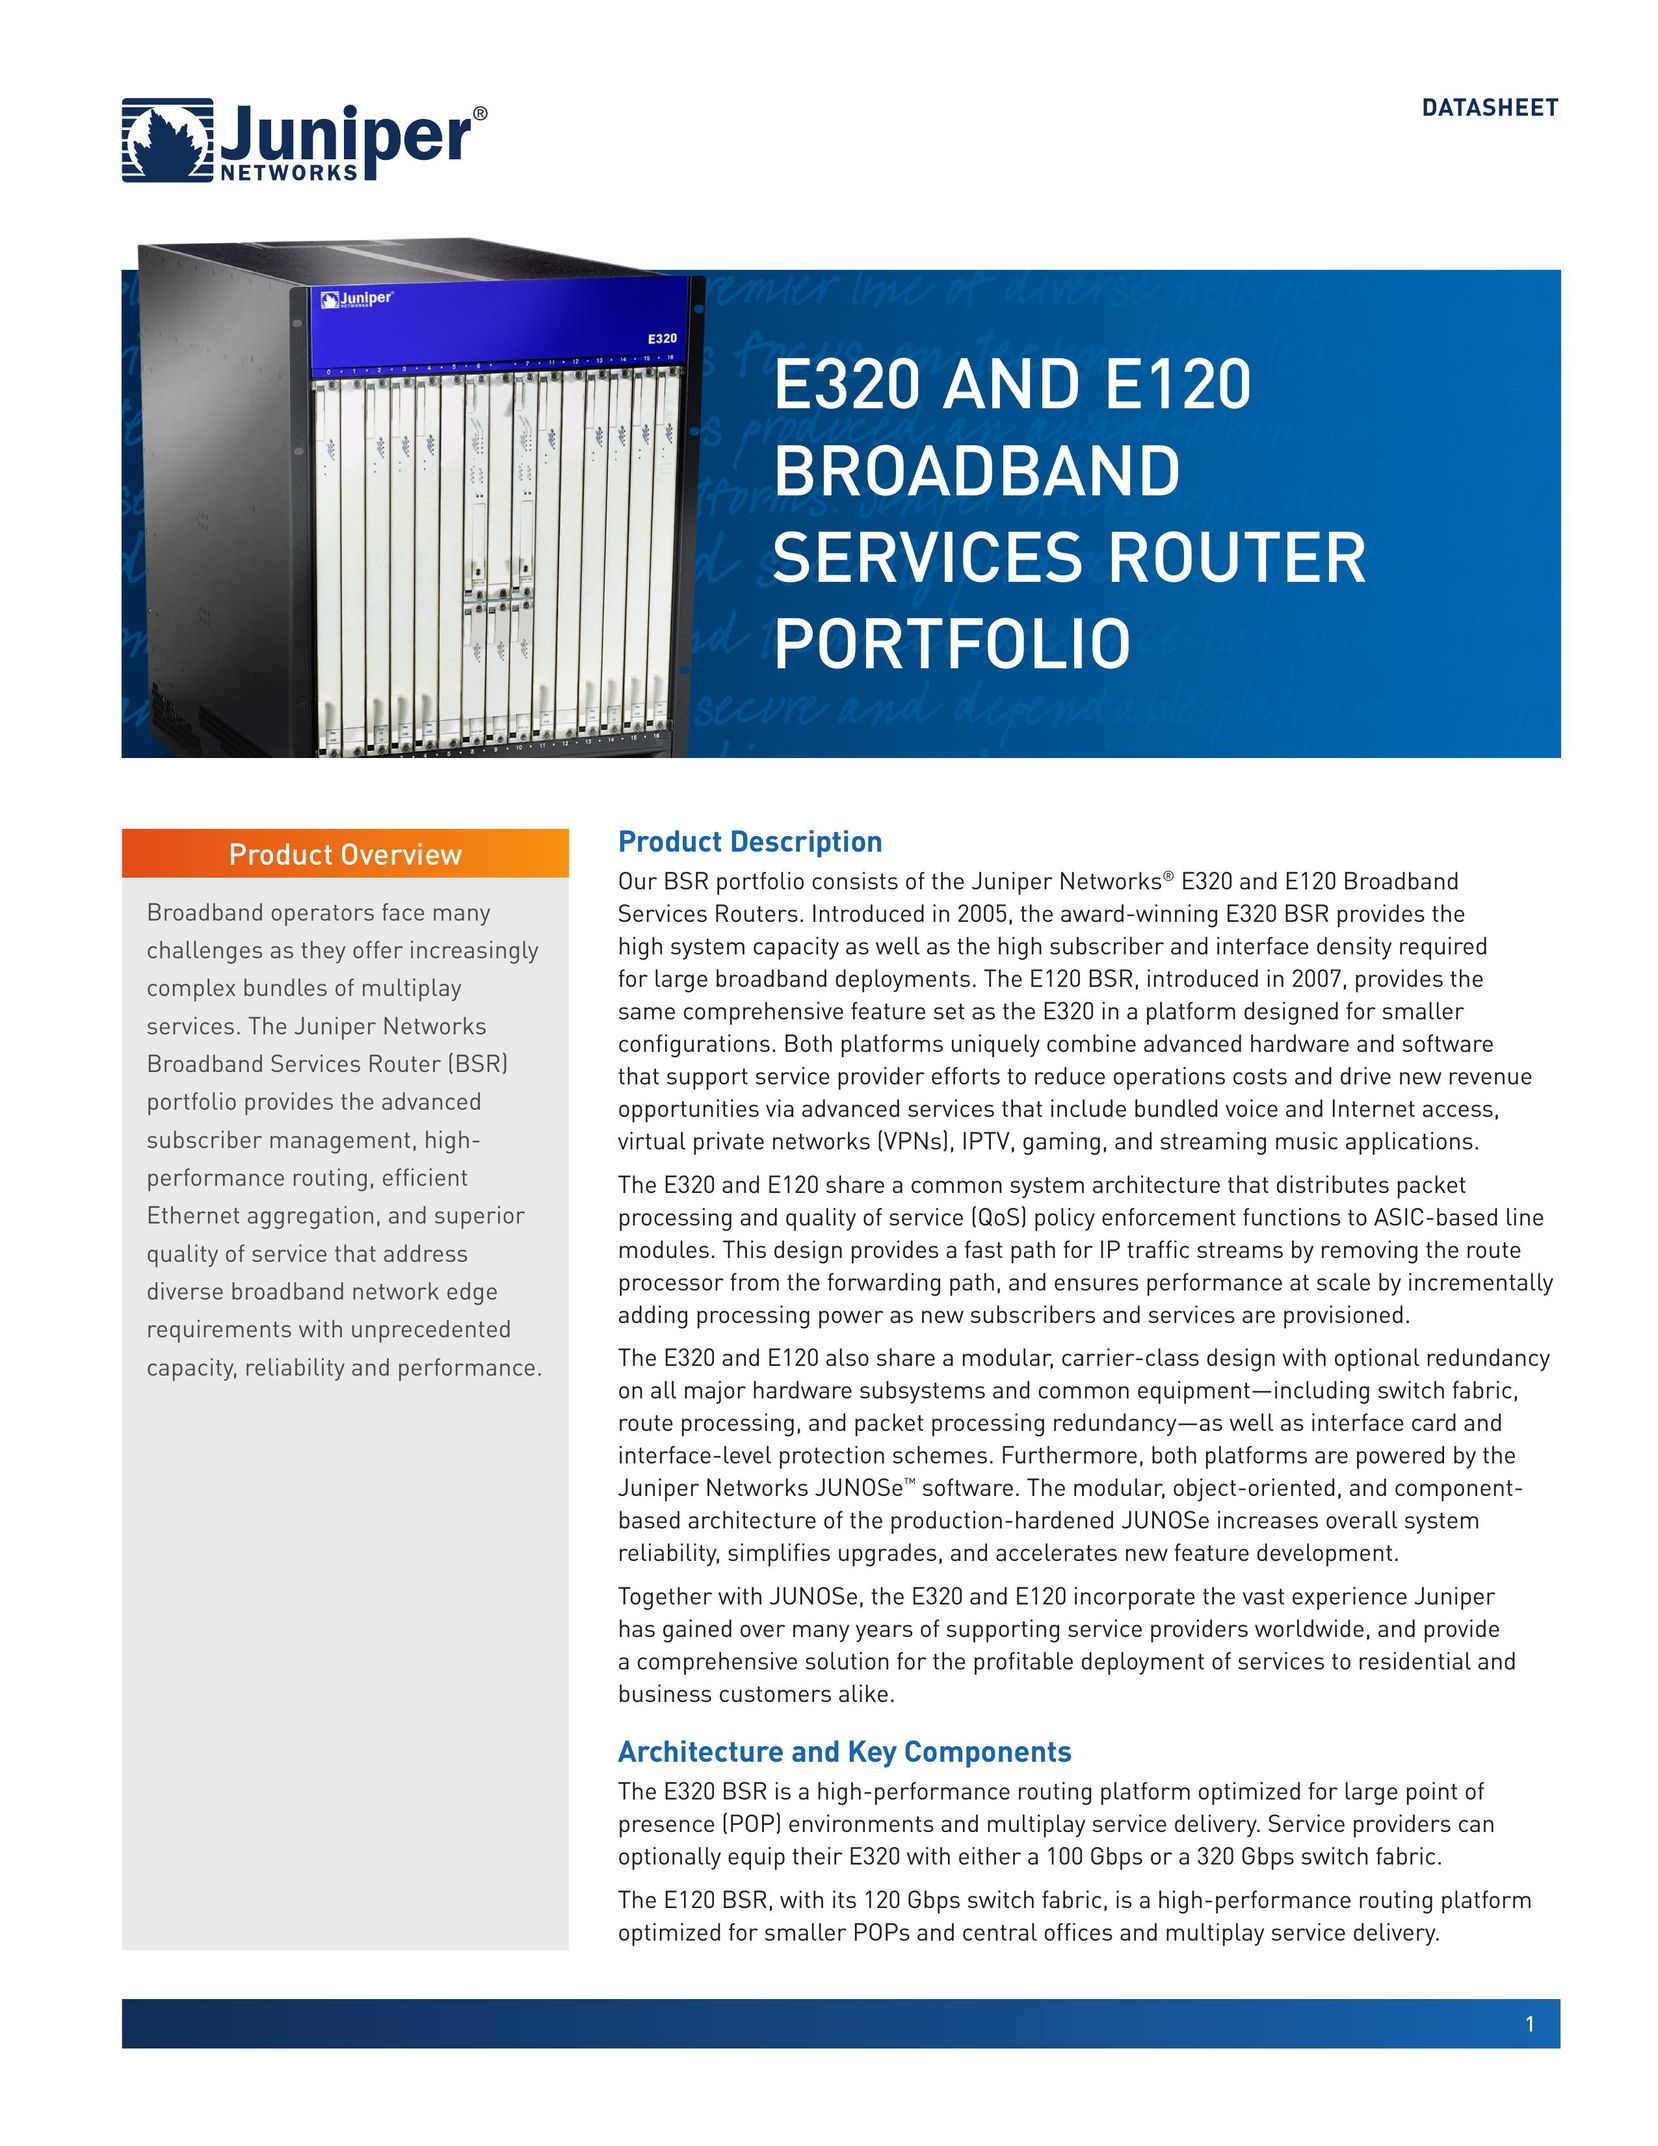 Juniper Networks E120 Network Router User Manual